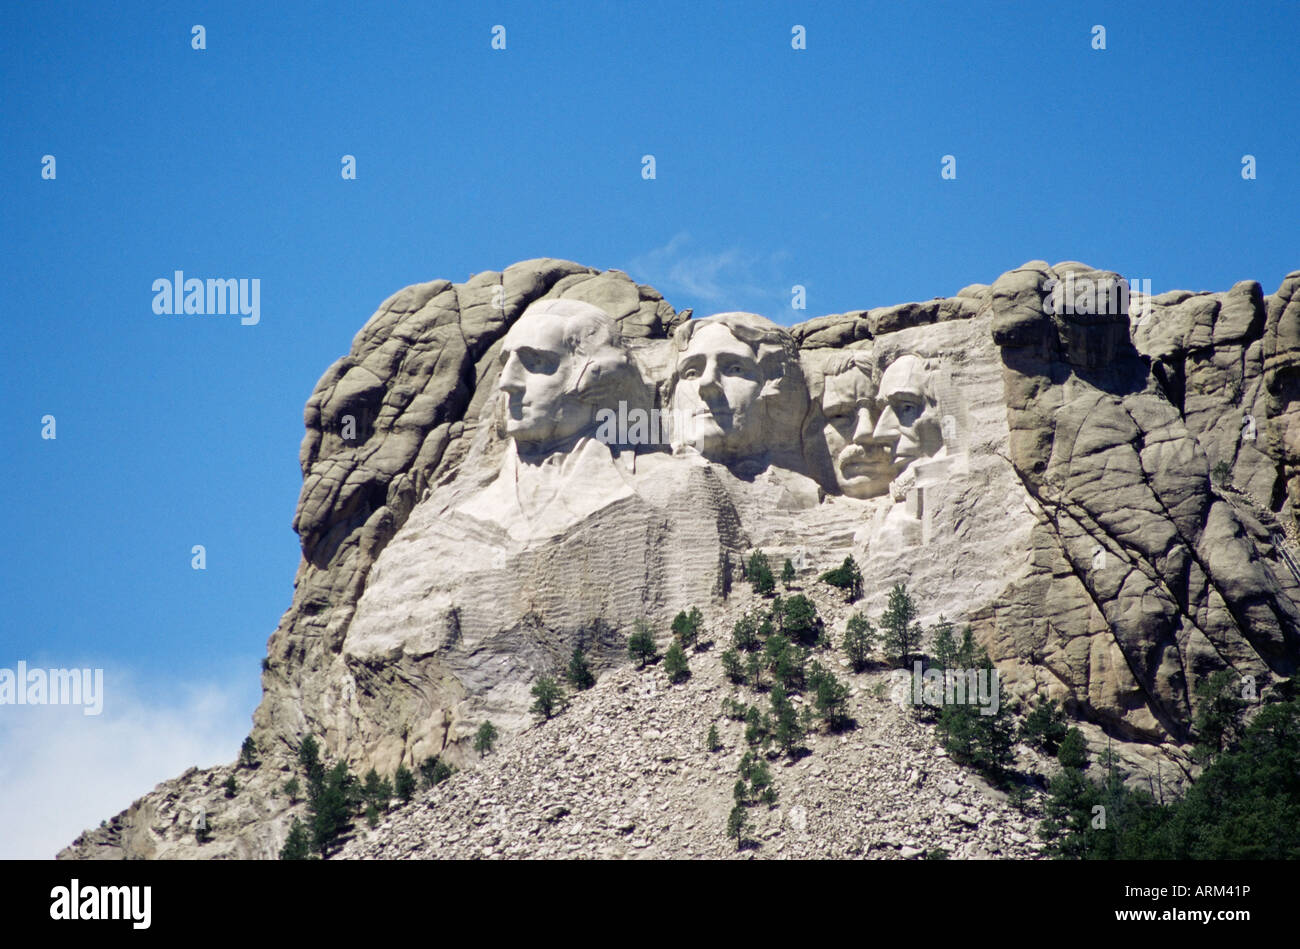 Mount Rushmore National Monument, Black Hills, South Dakota, United States of America, North America Stock Photo